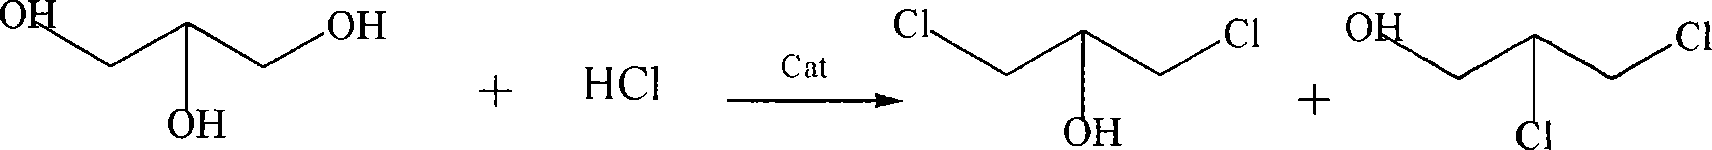 Method for preparing dichloropropanol by glycerol